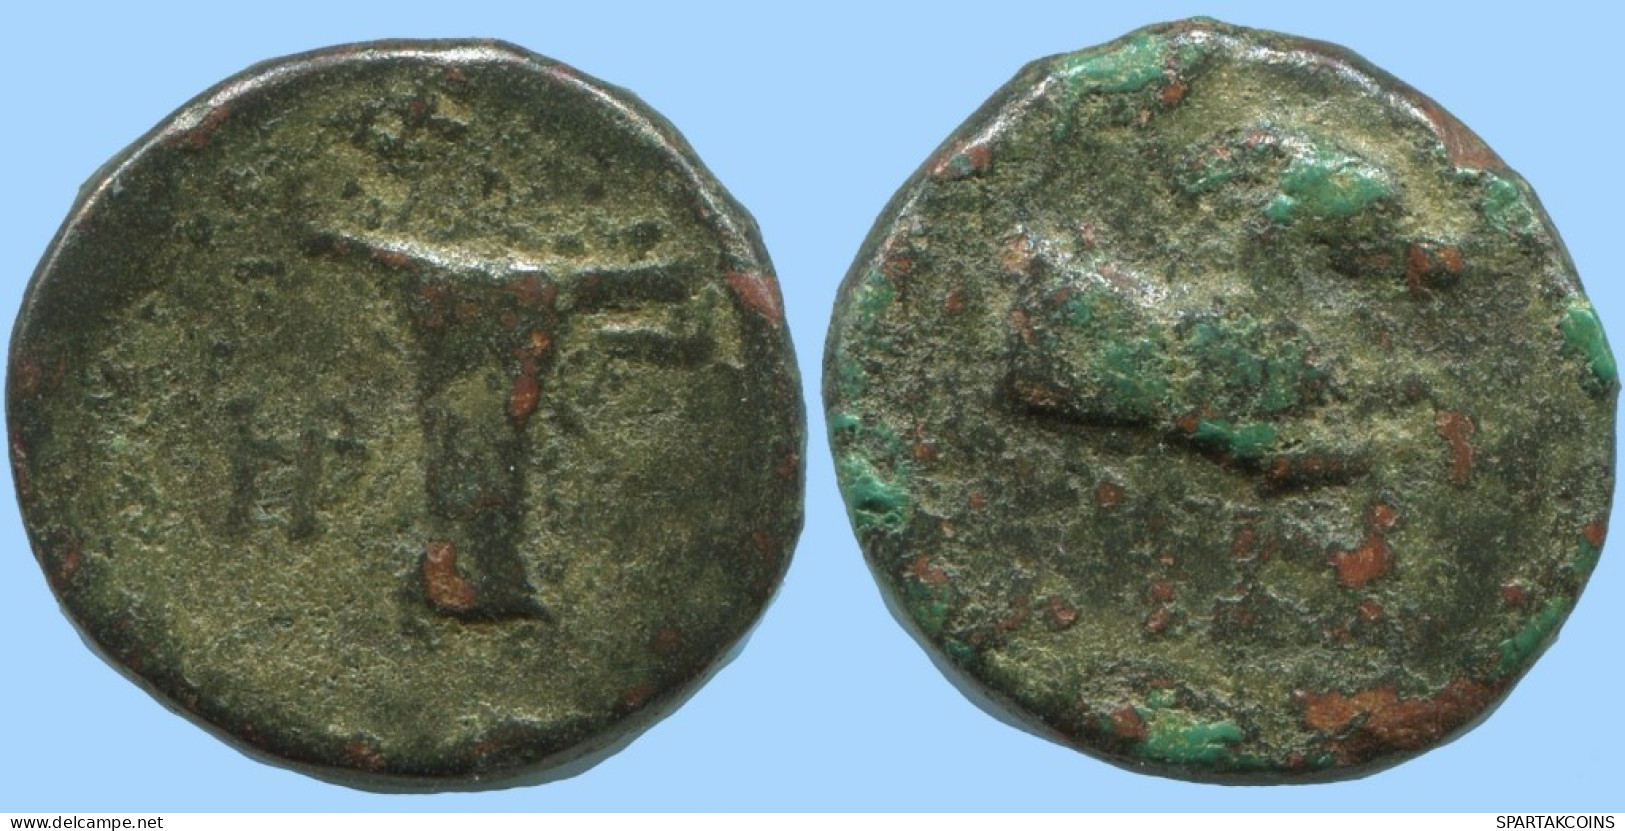 AIOLIS KYME HORSE SKYPHOS Authentic Ancient GREEK Coin 4.7g/18mm #AG028.12.U.A - Griechische Münzen